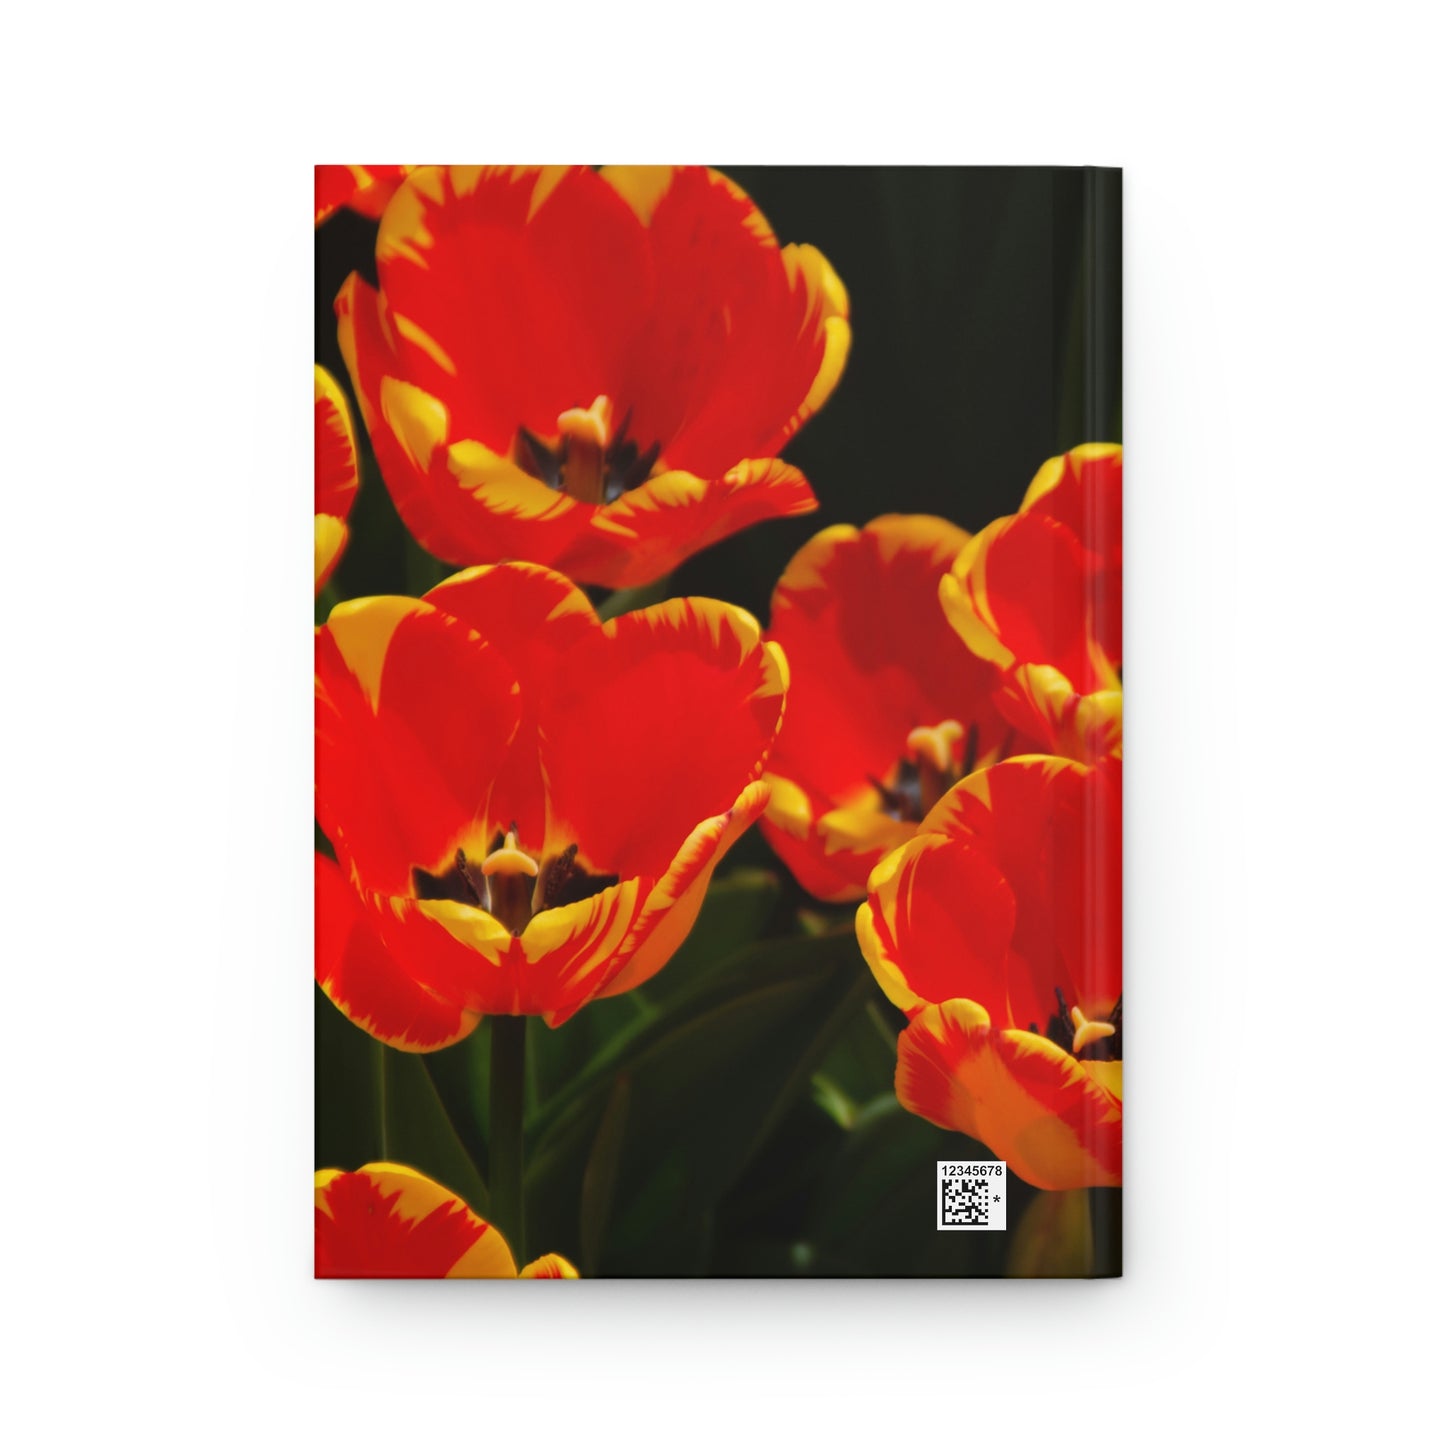 Flowers 20 Hardcover Journal Matte